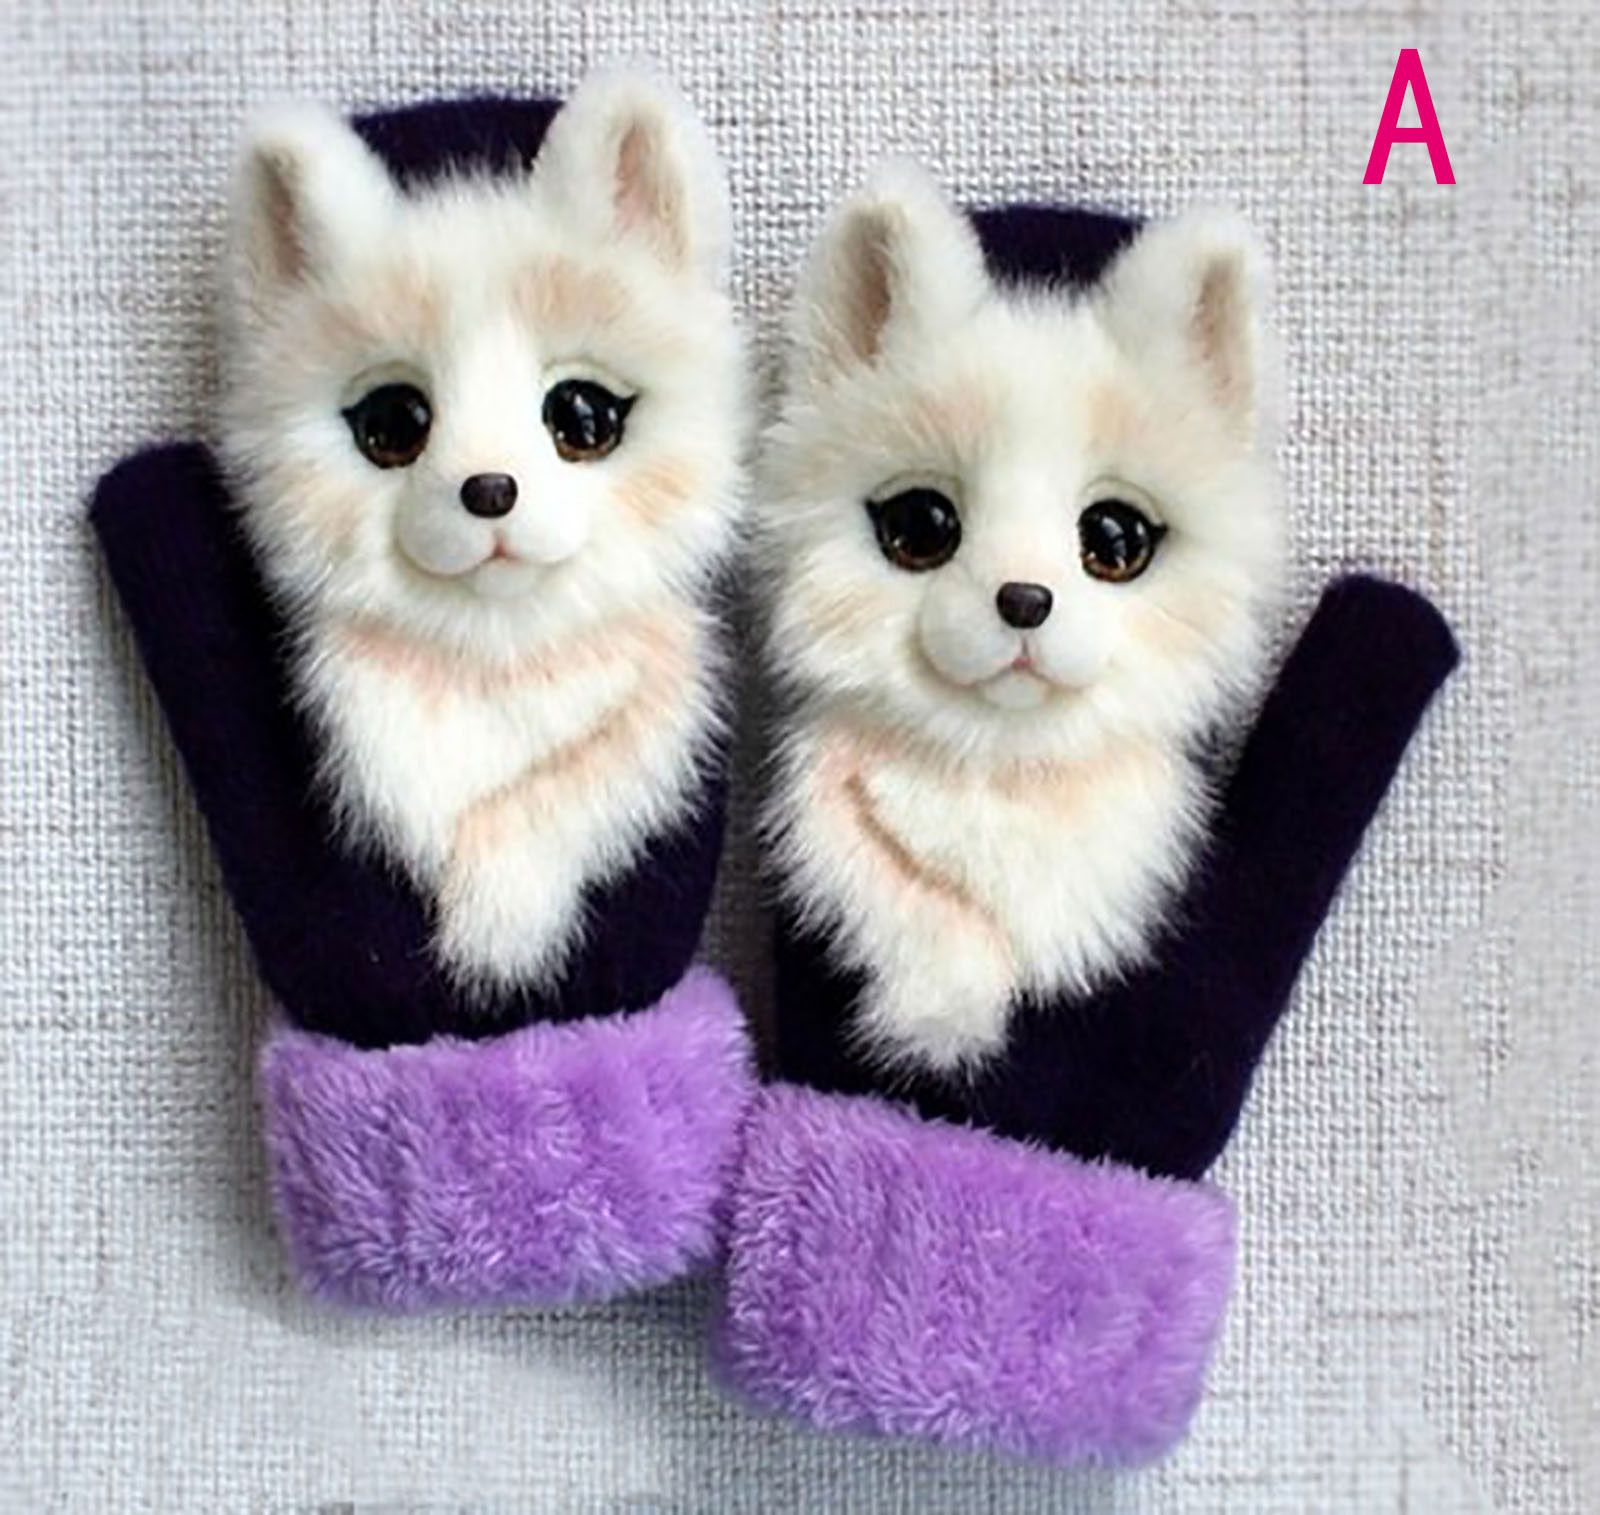 Womens Mens Winter Knitted Gloves Kawaii Gloves For Hand Arthritis Cute 3D Cartoon Animal Thermal Mittens D10